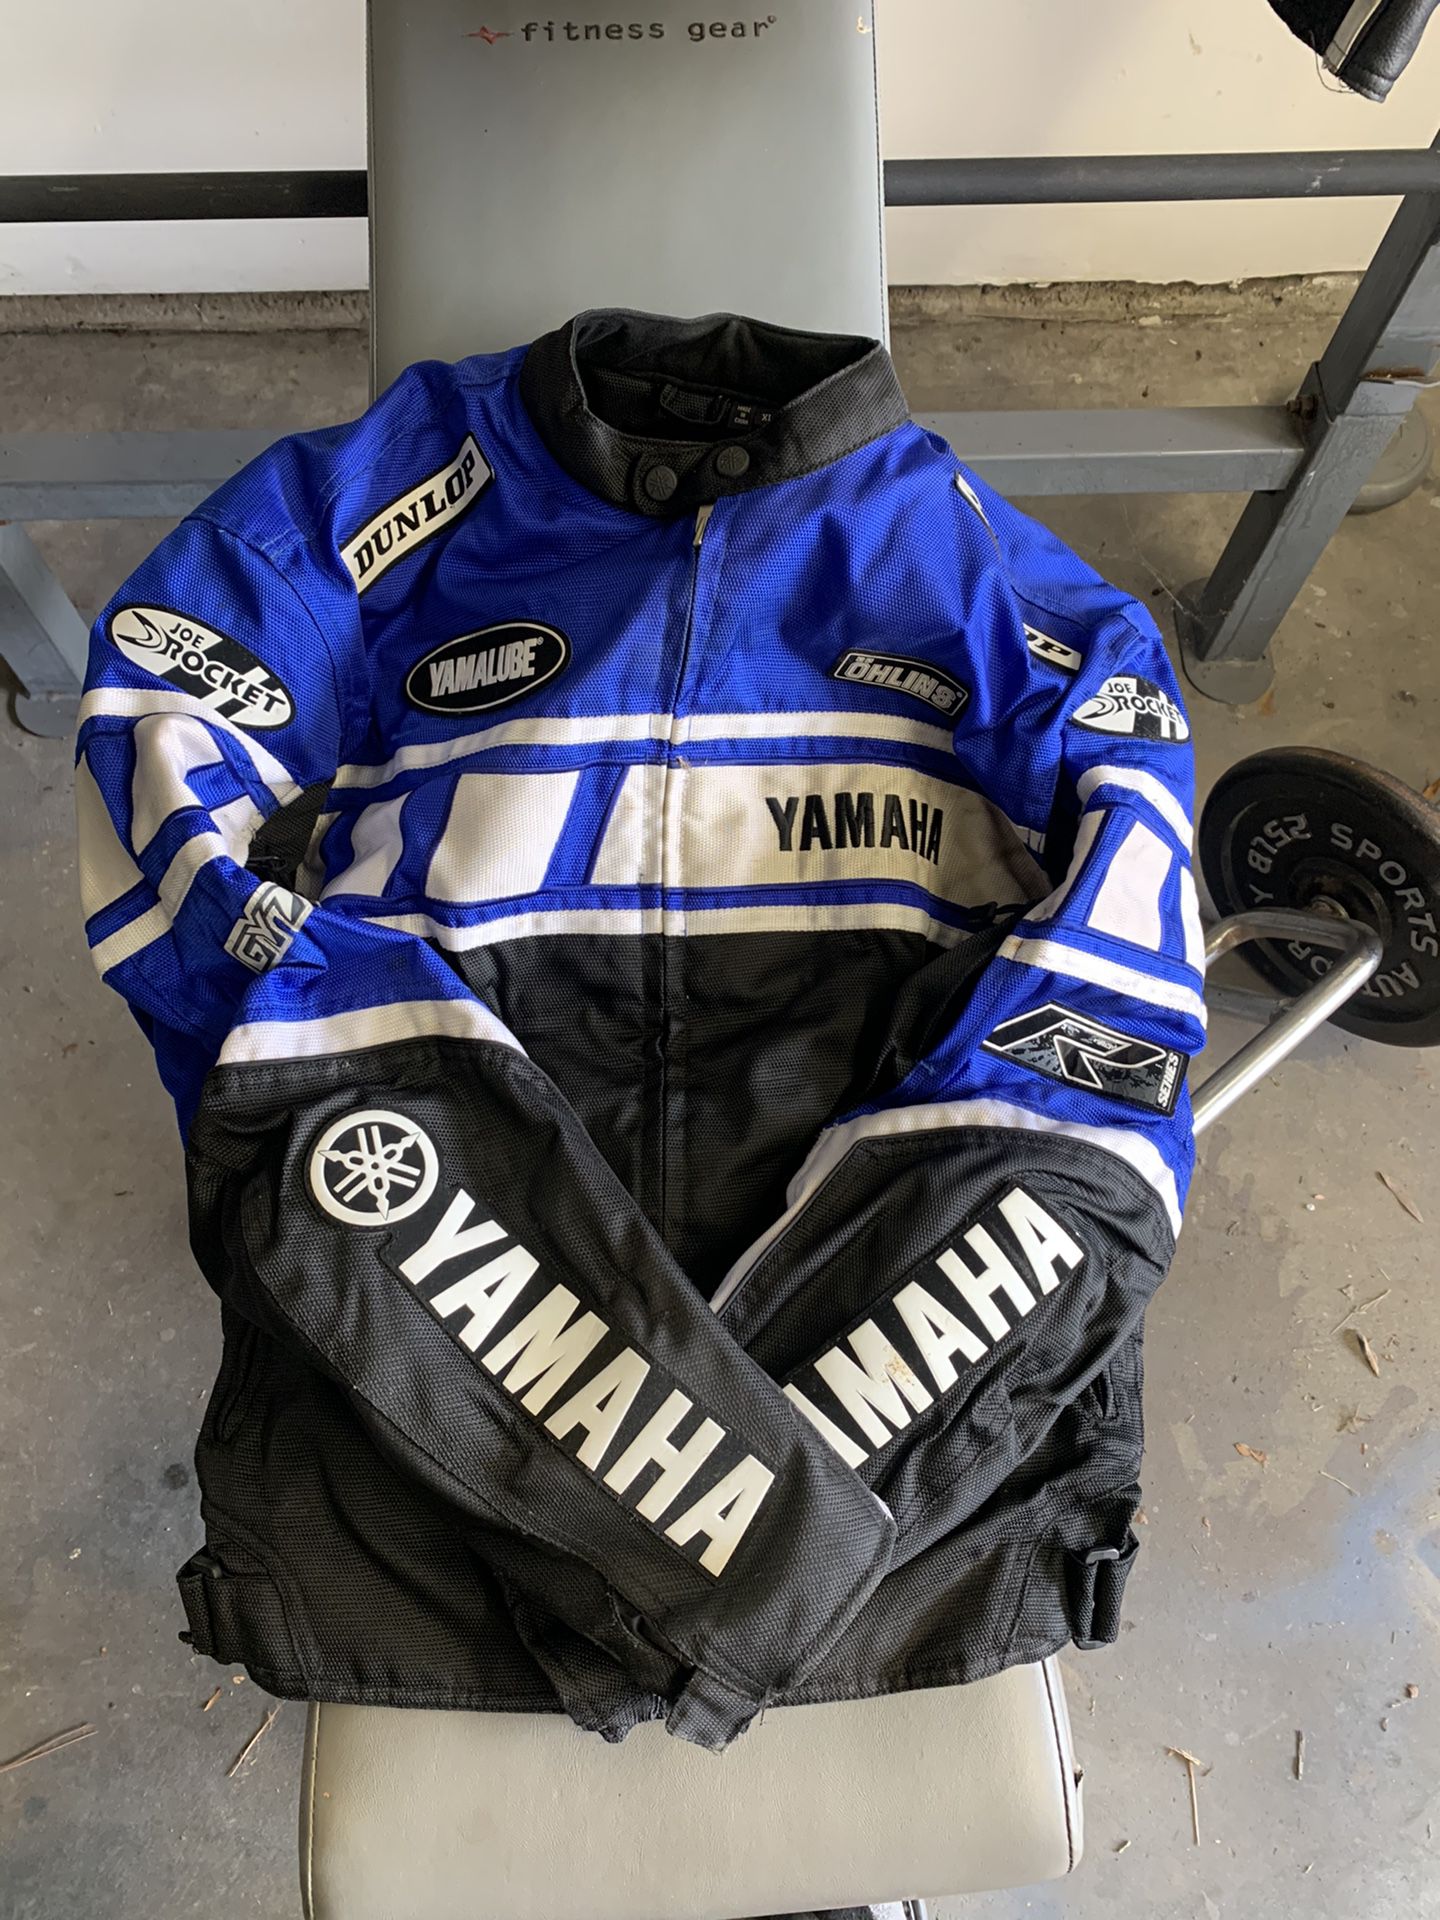 Joe Rocket Yamaha motorcycle Jackets